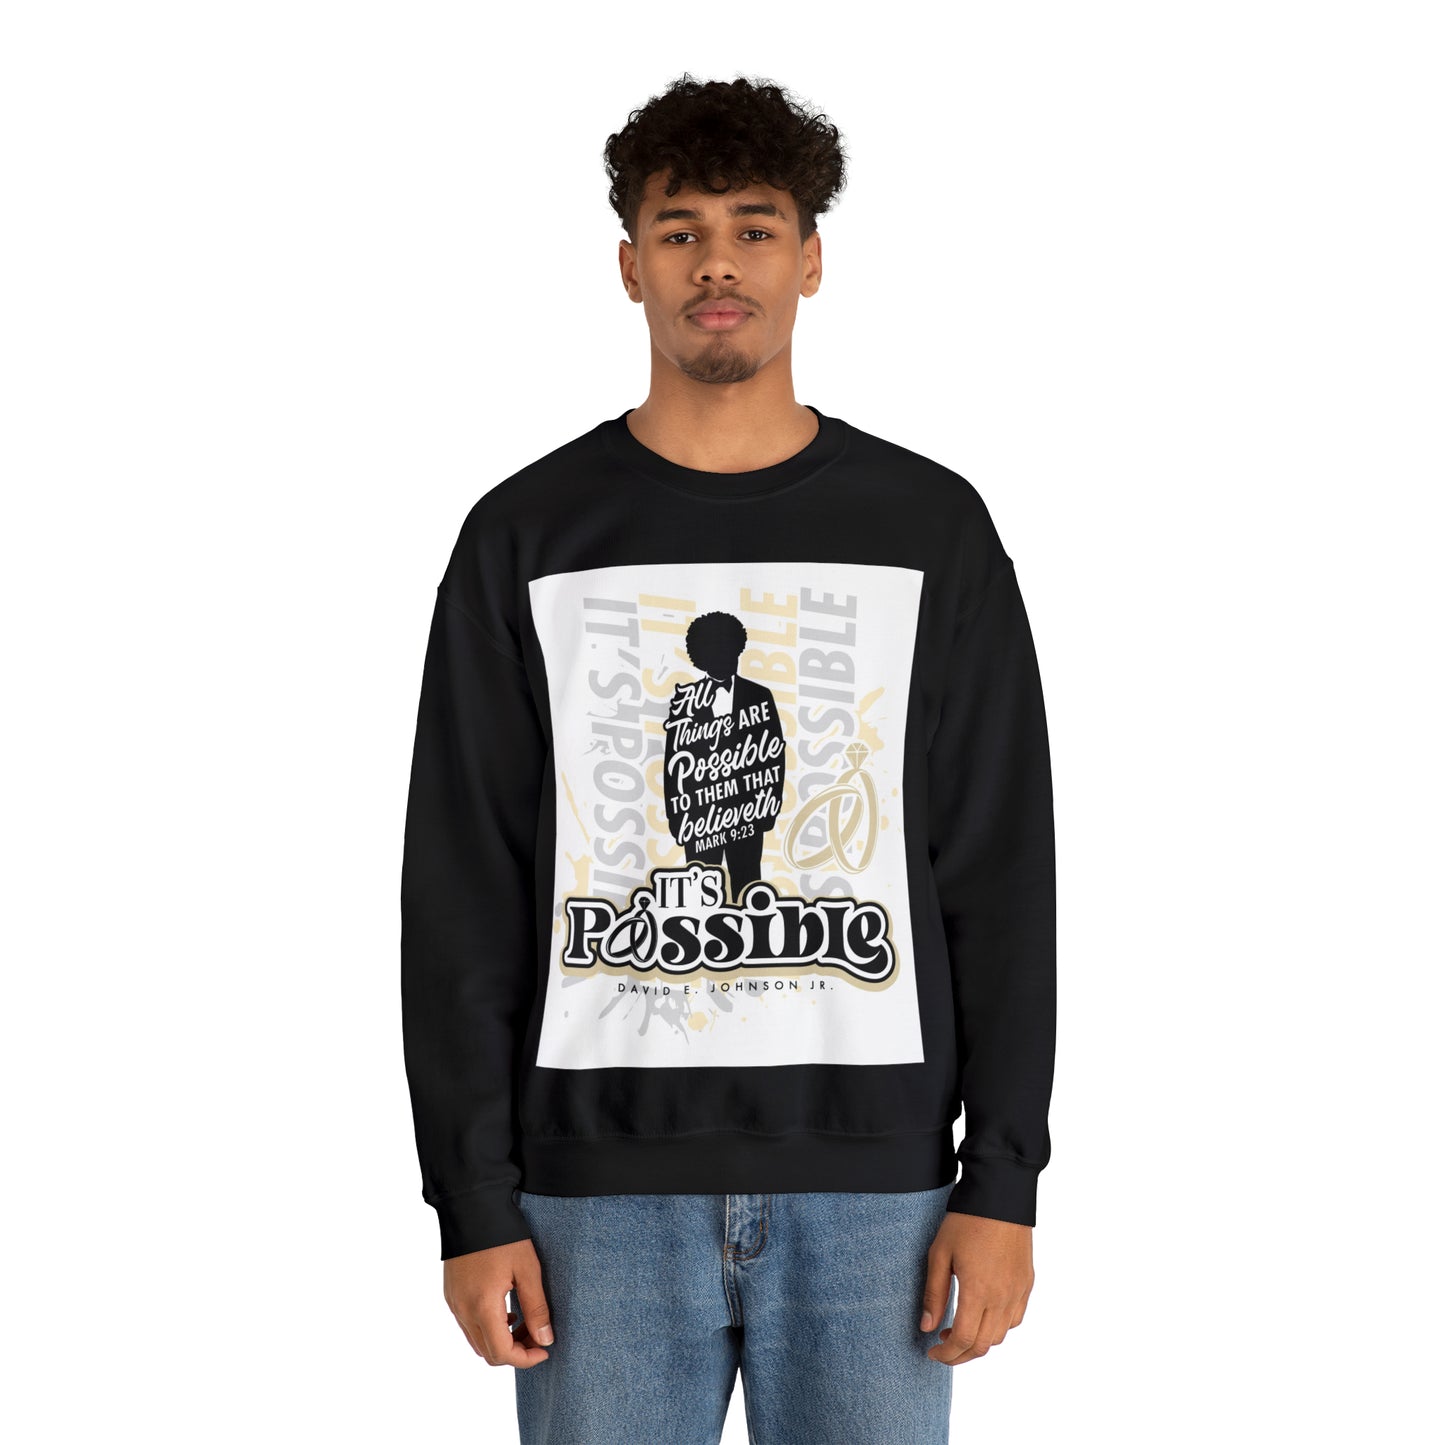 "It's Possible" Single Unisex Heavy Blend™ Crewneck Sweatshirt (Black)